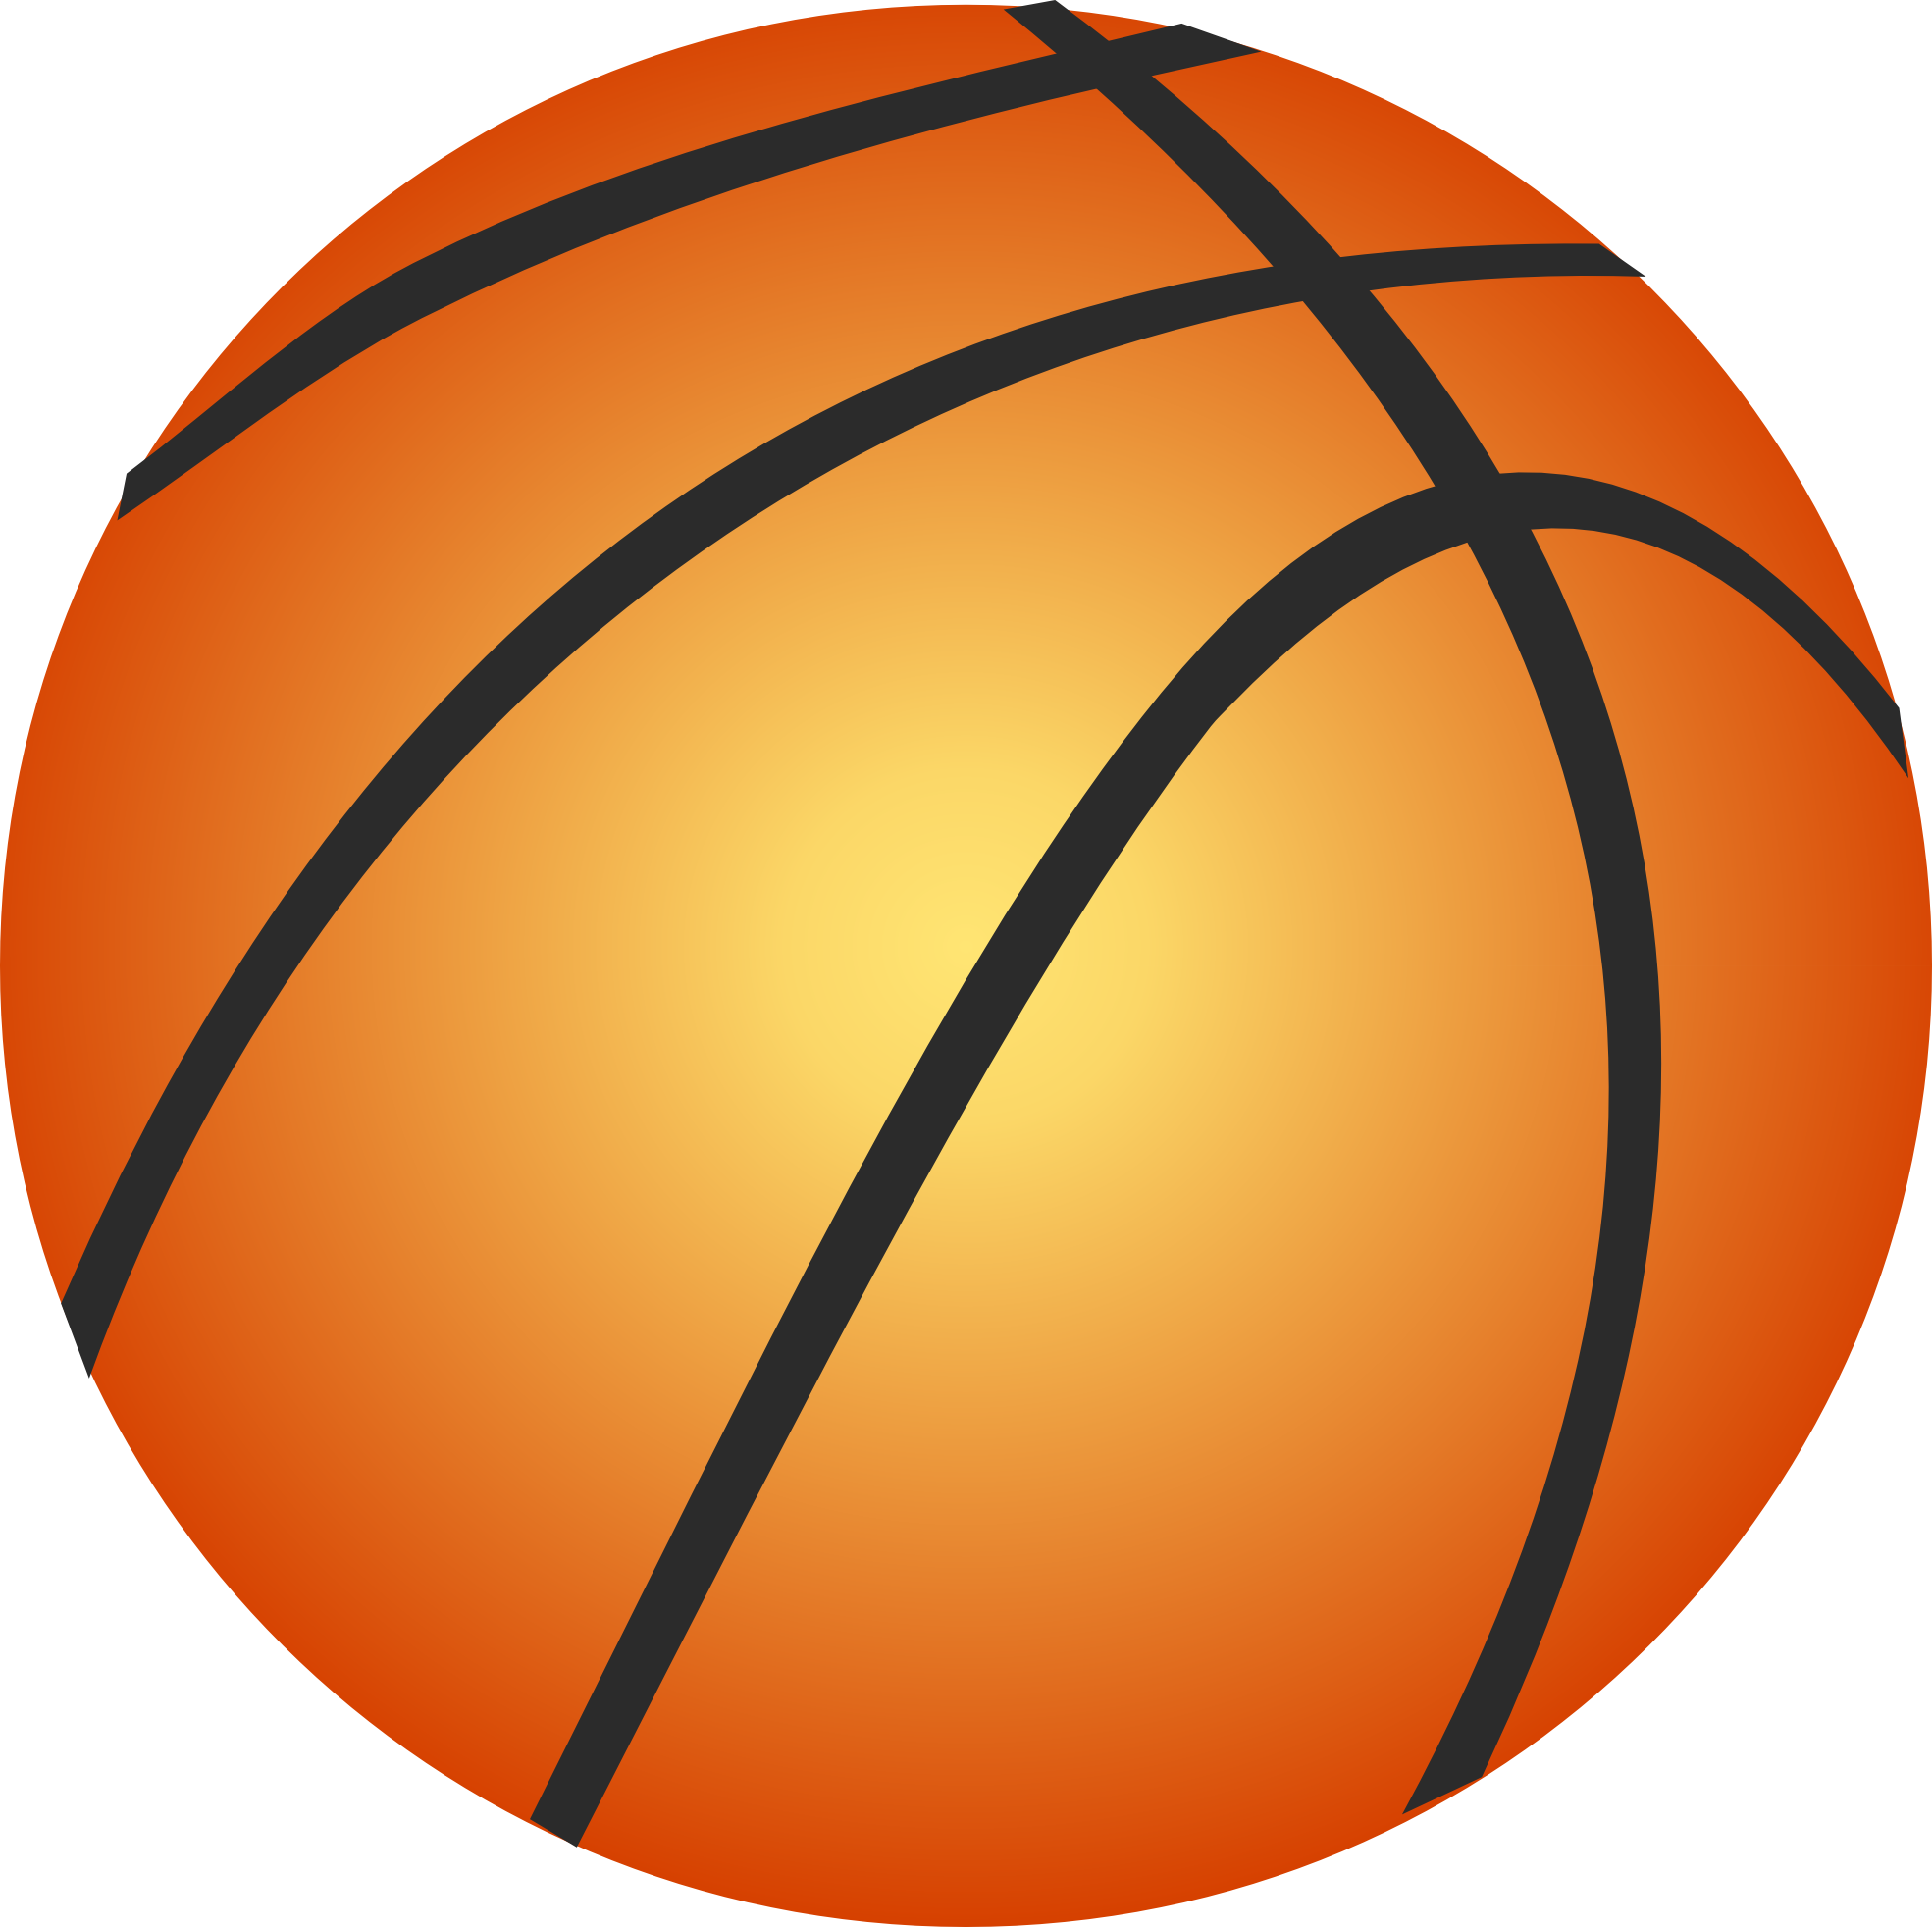 Basketball clipart image